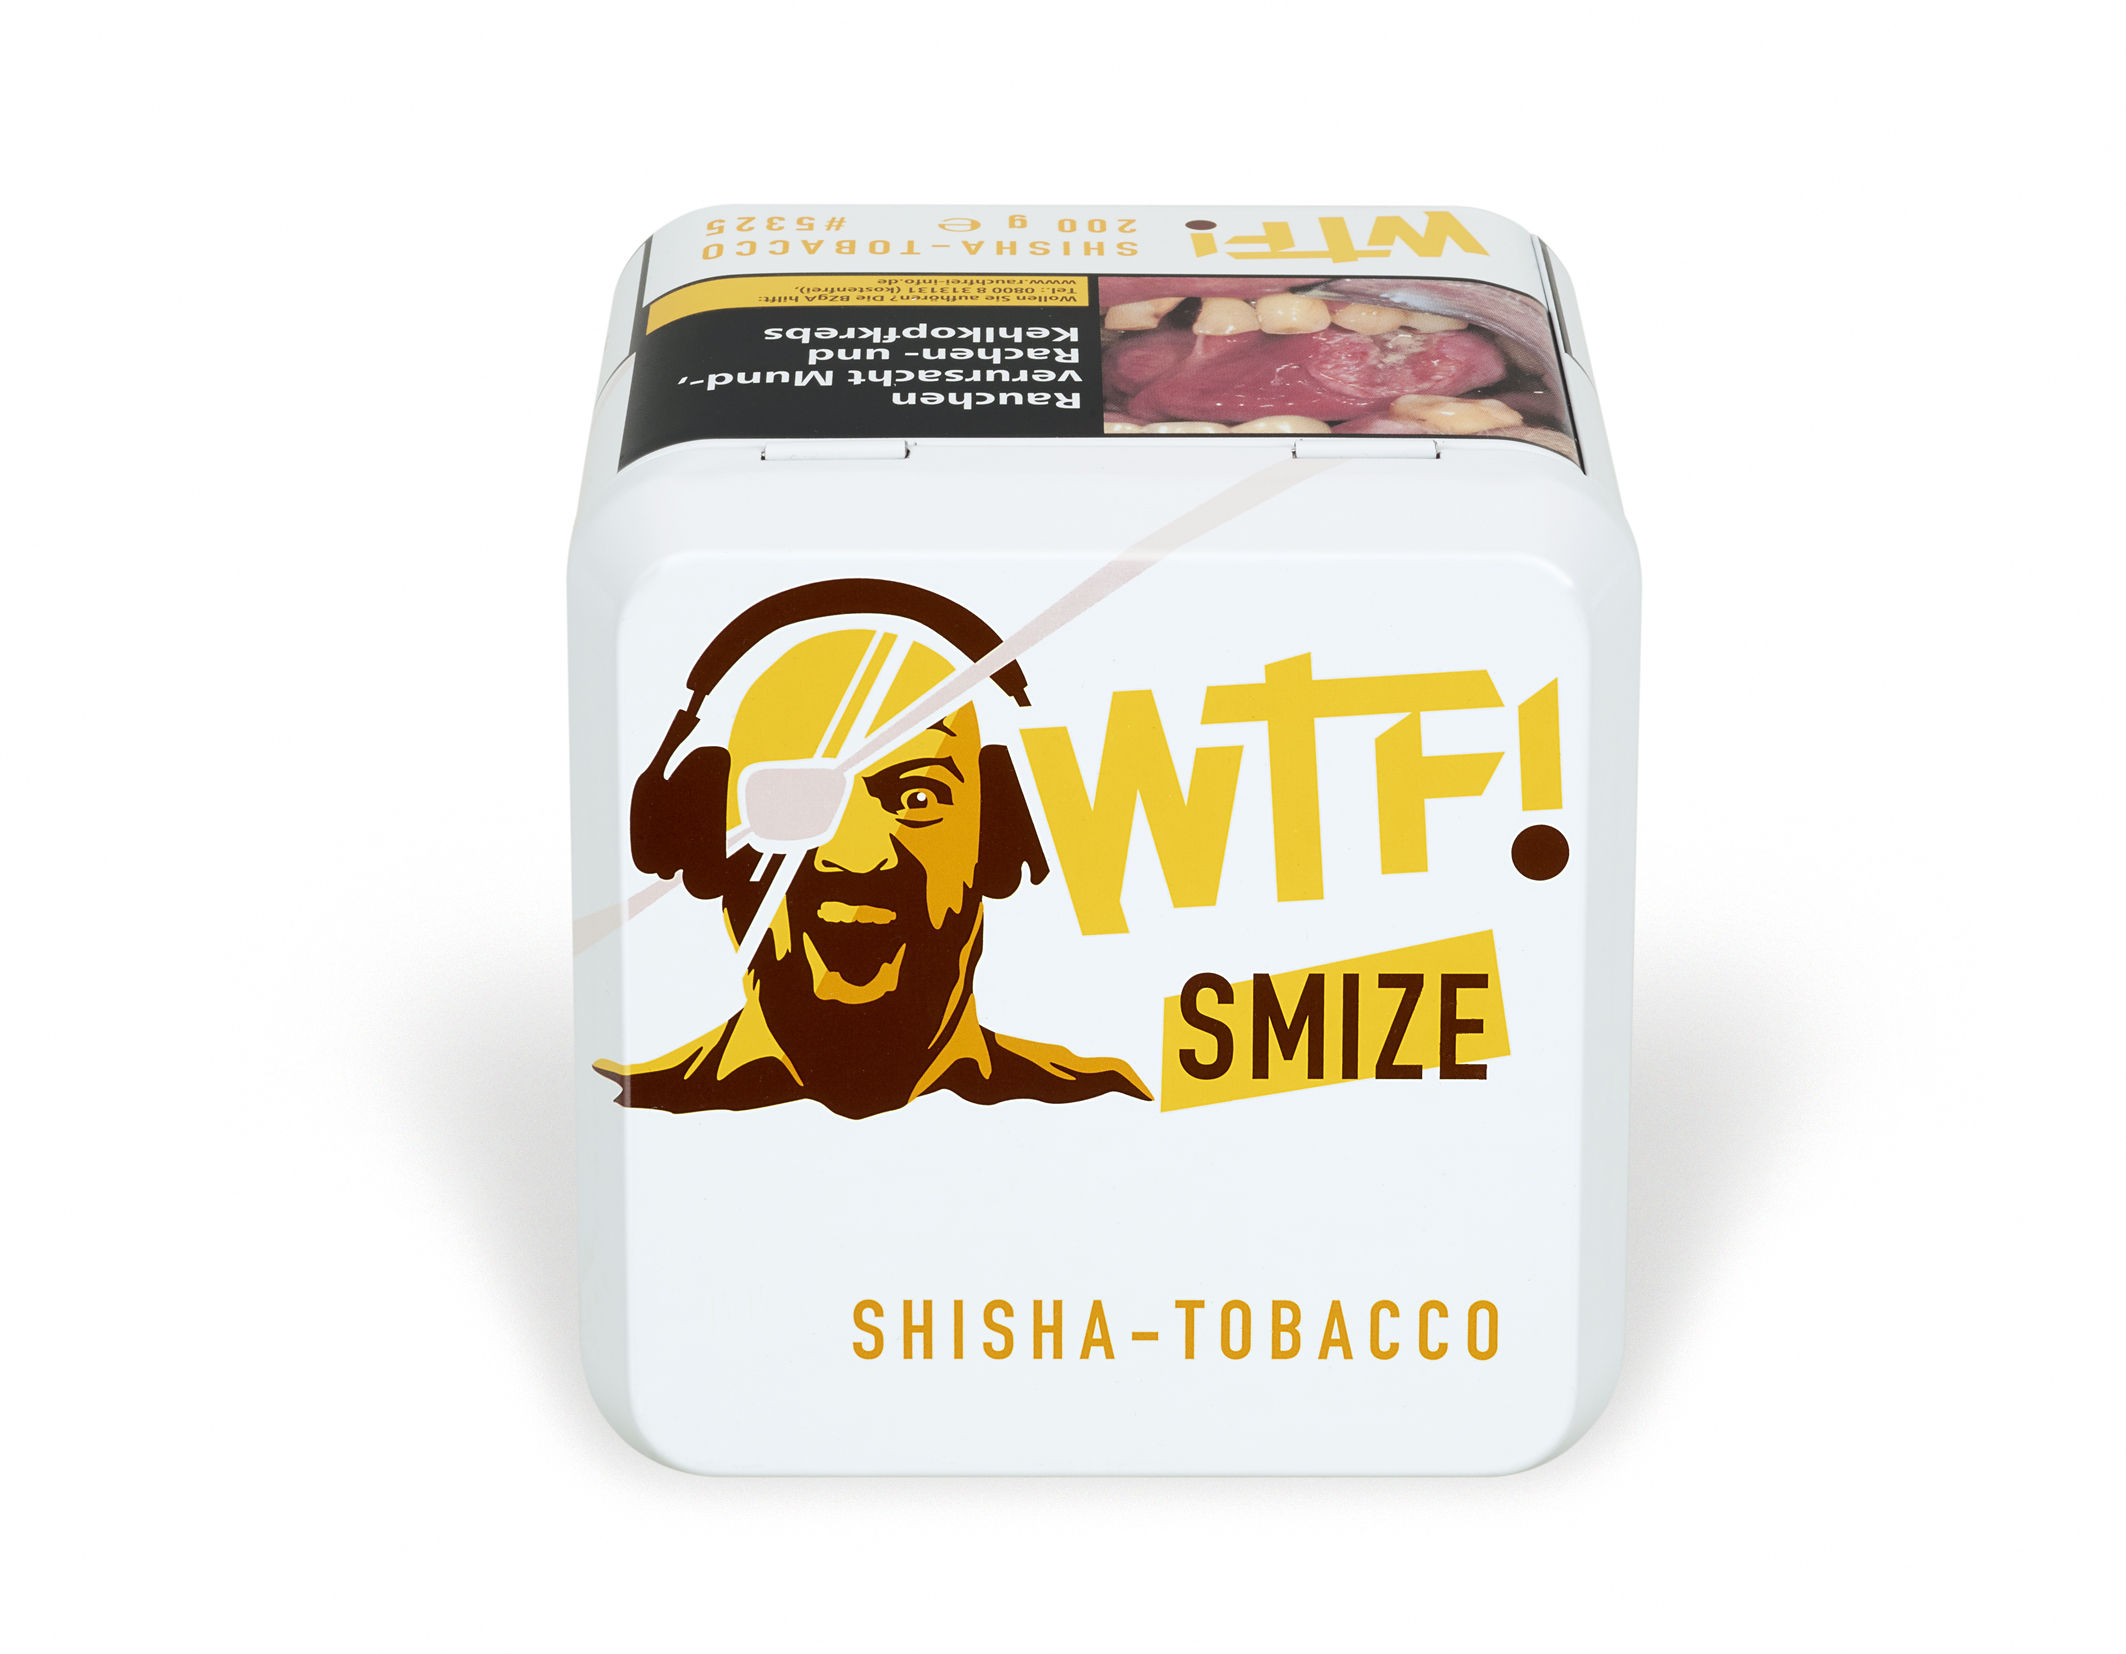 WTF! Shisha-Tobacco Smize